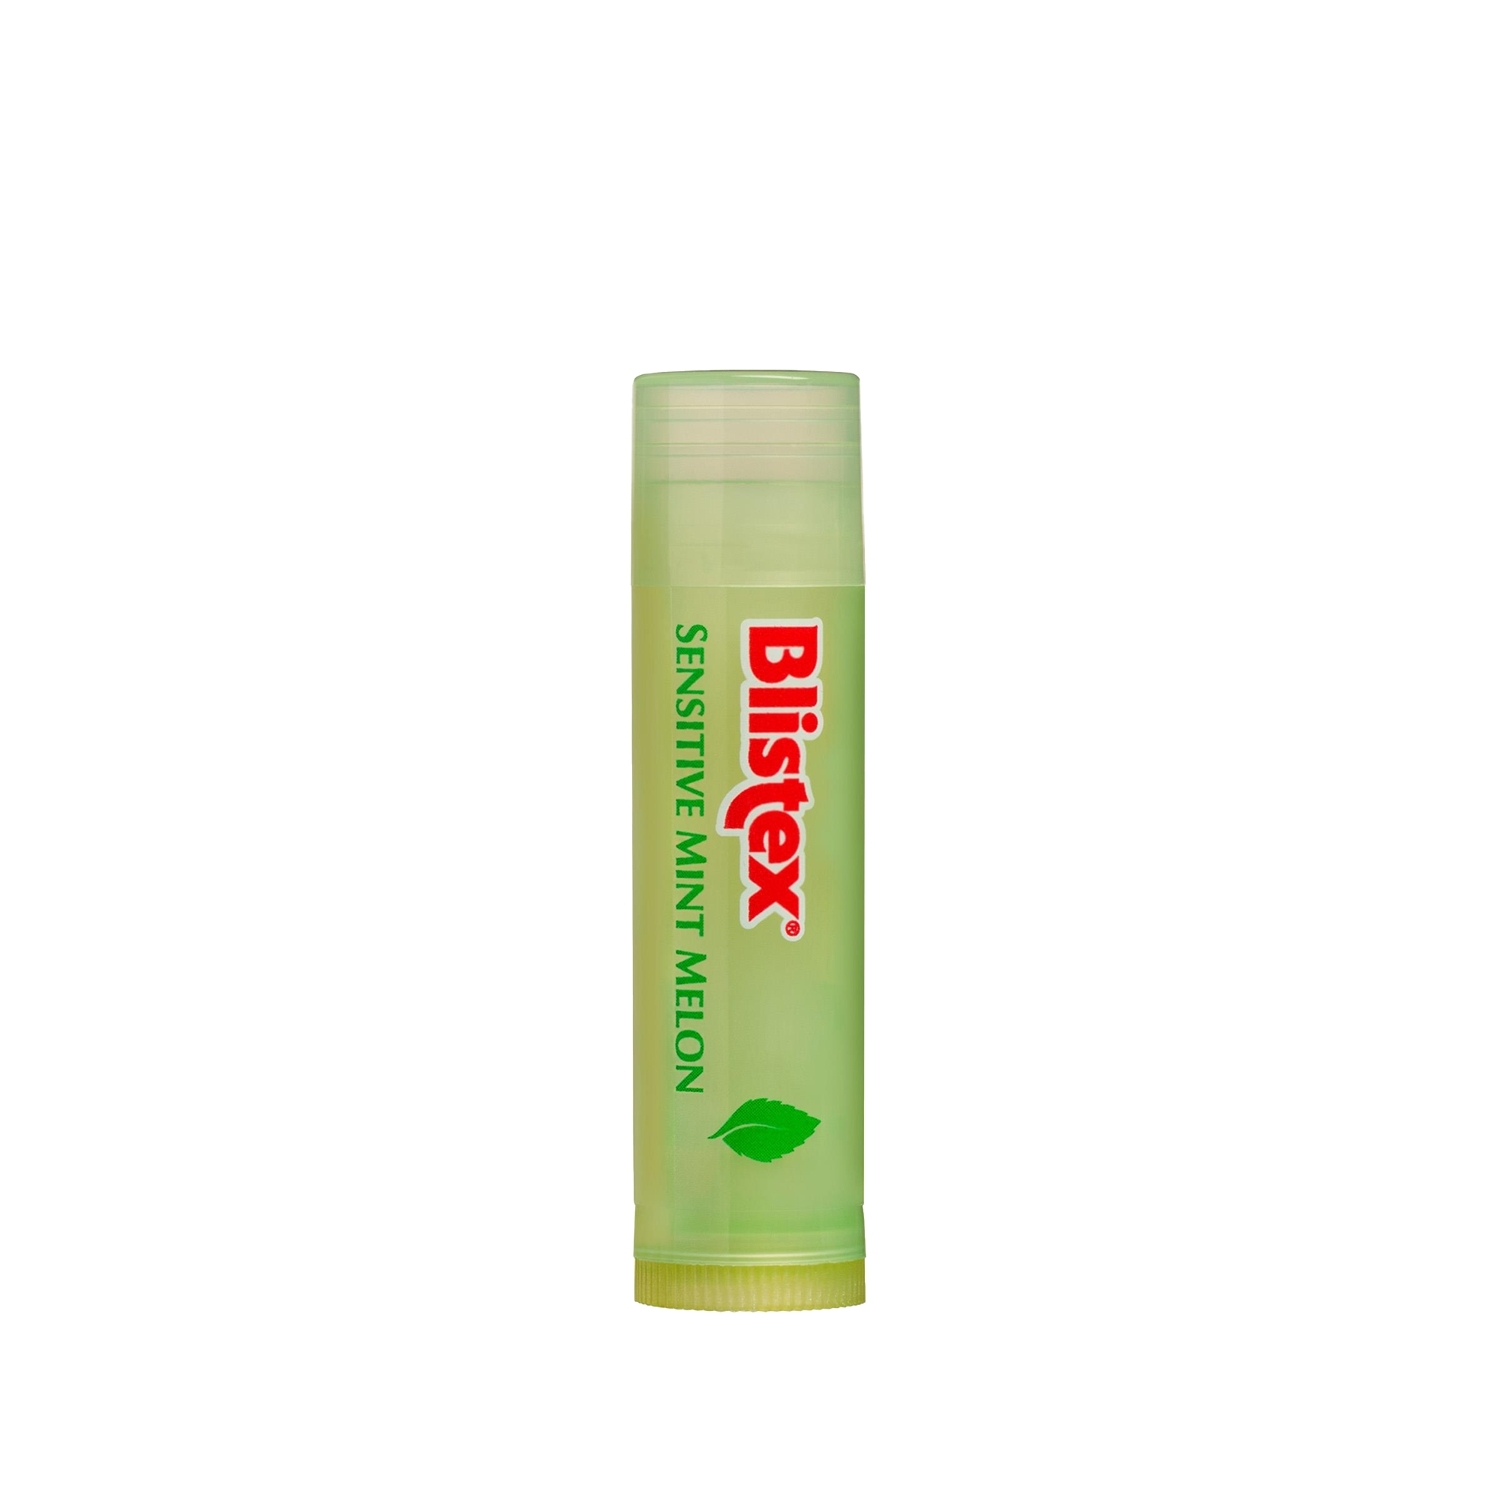 Blistex Sensitive Mint Melon Hassas Dudaklar İçin Besleyici Krem 4.25 g